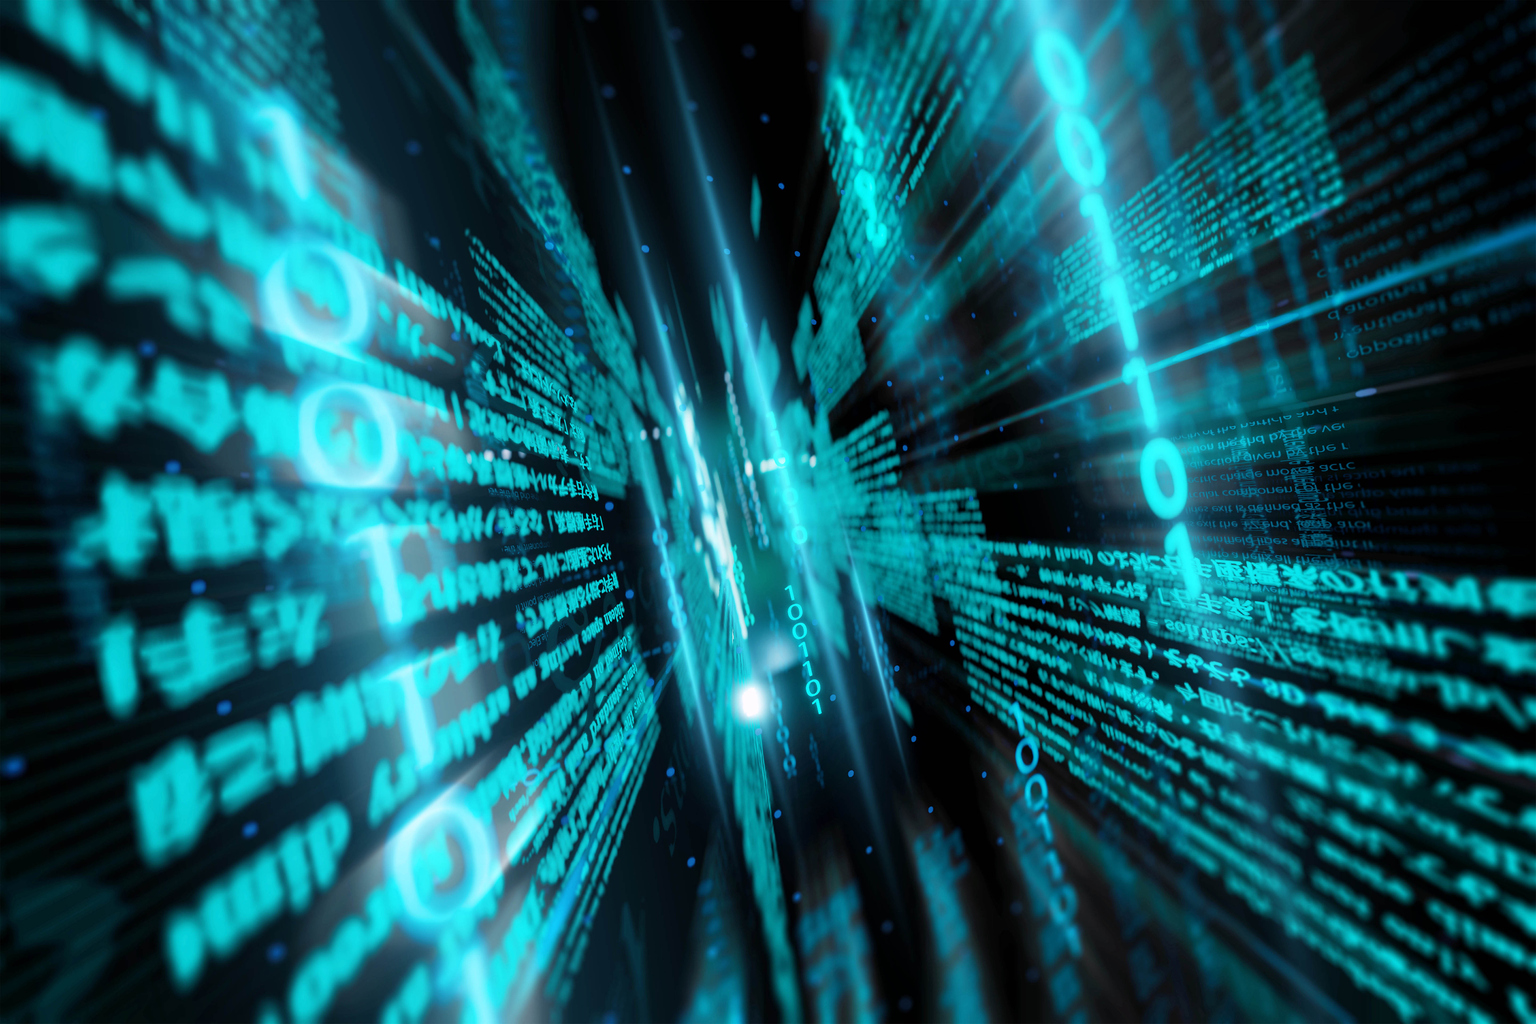 Digital data and binary code in network